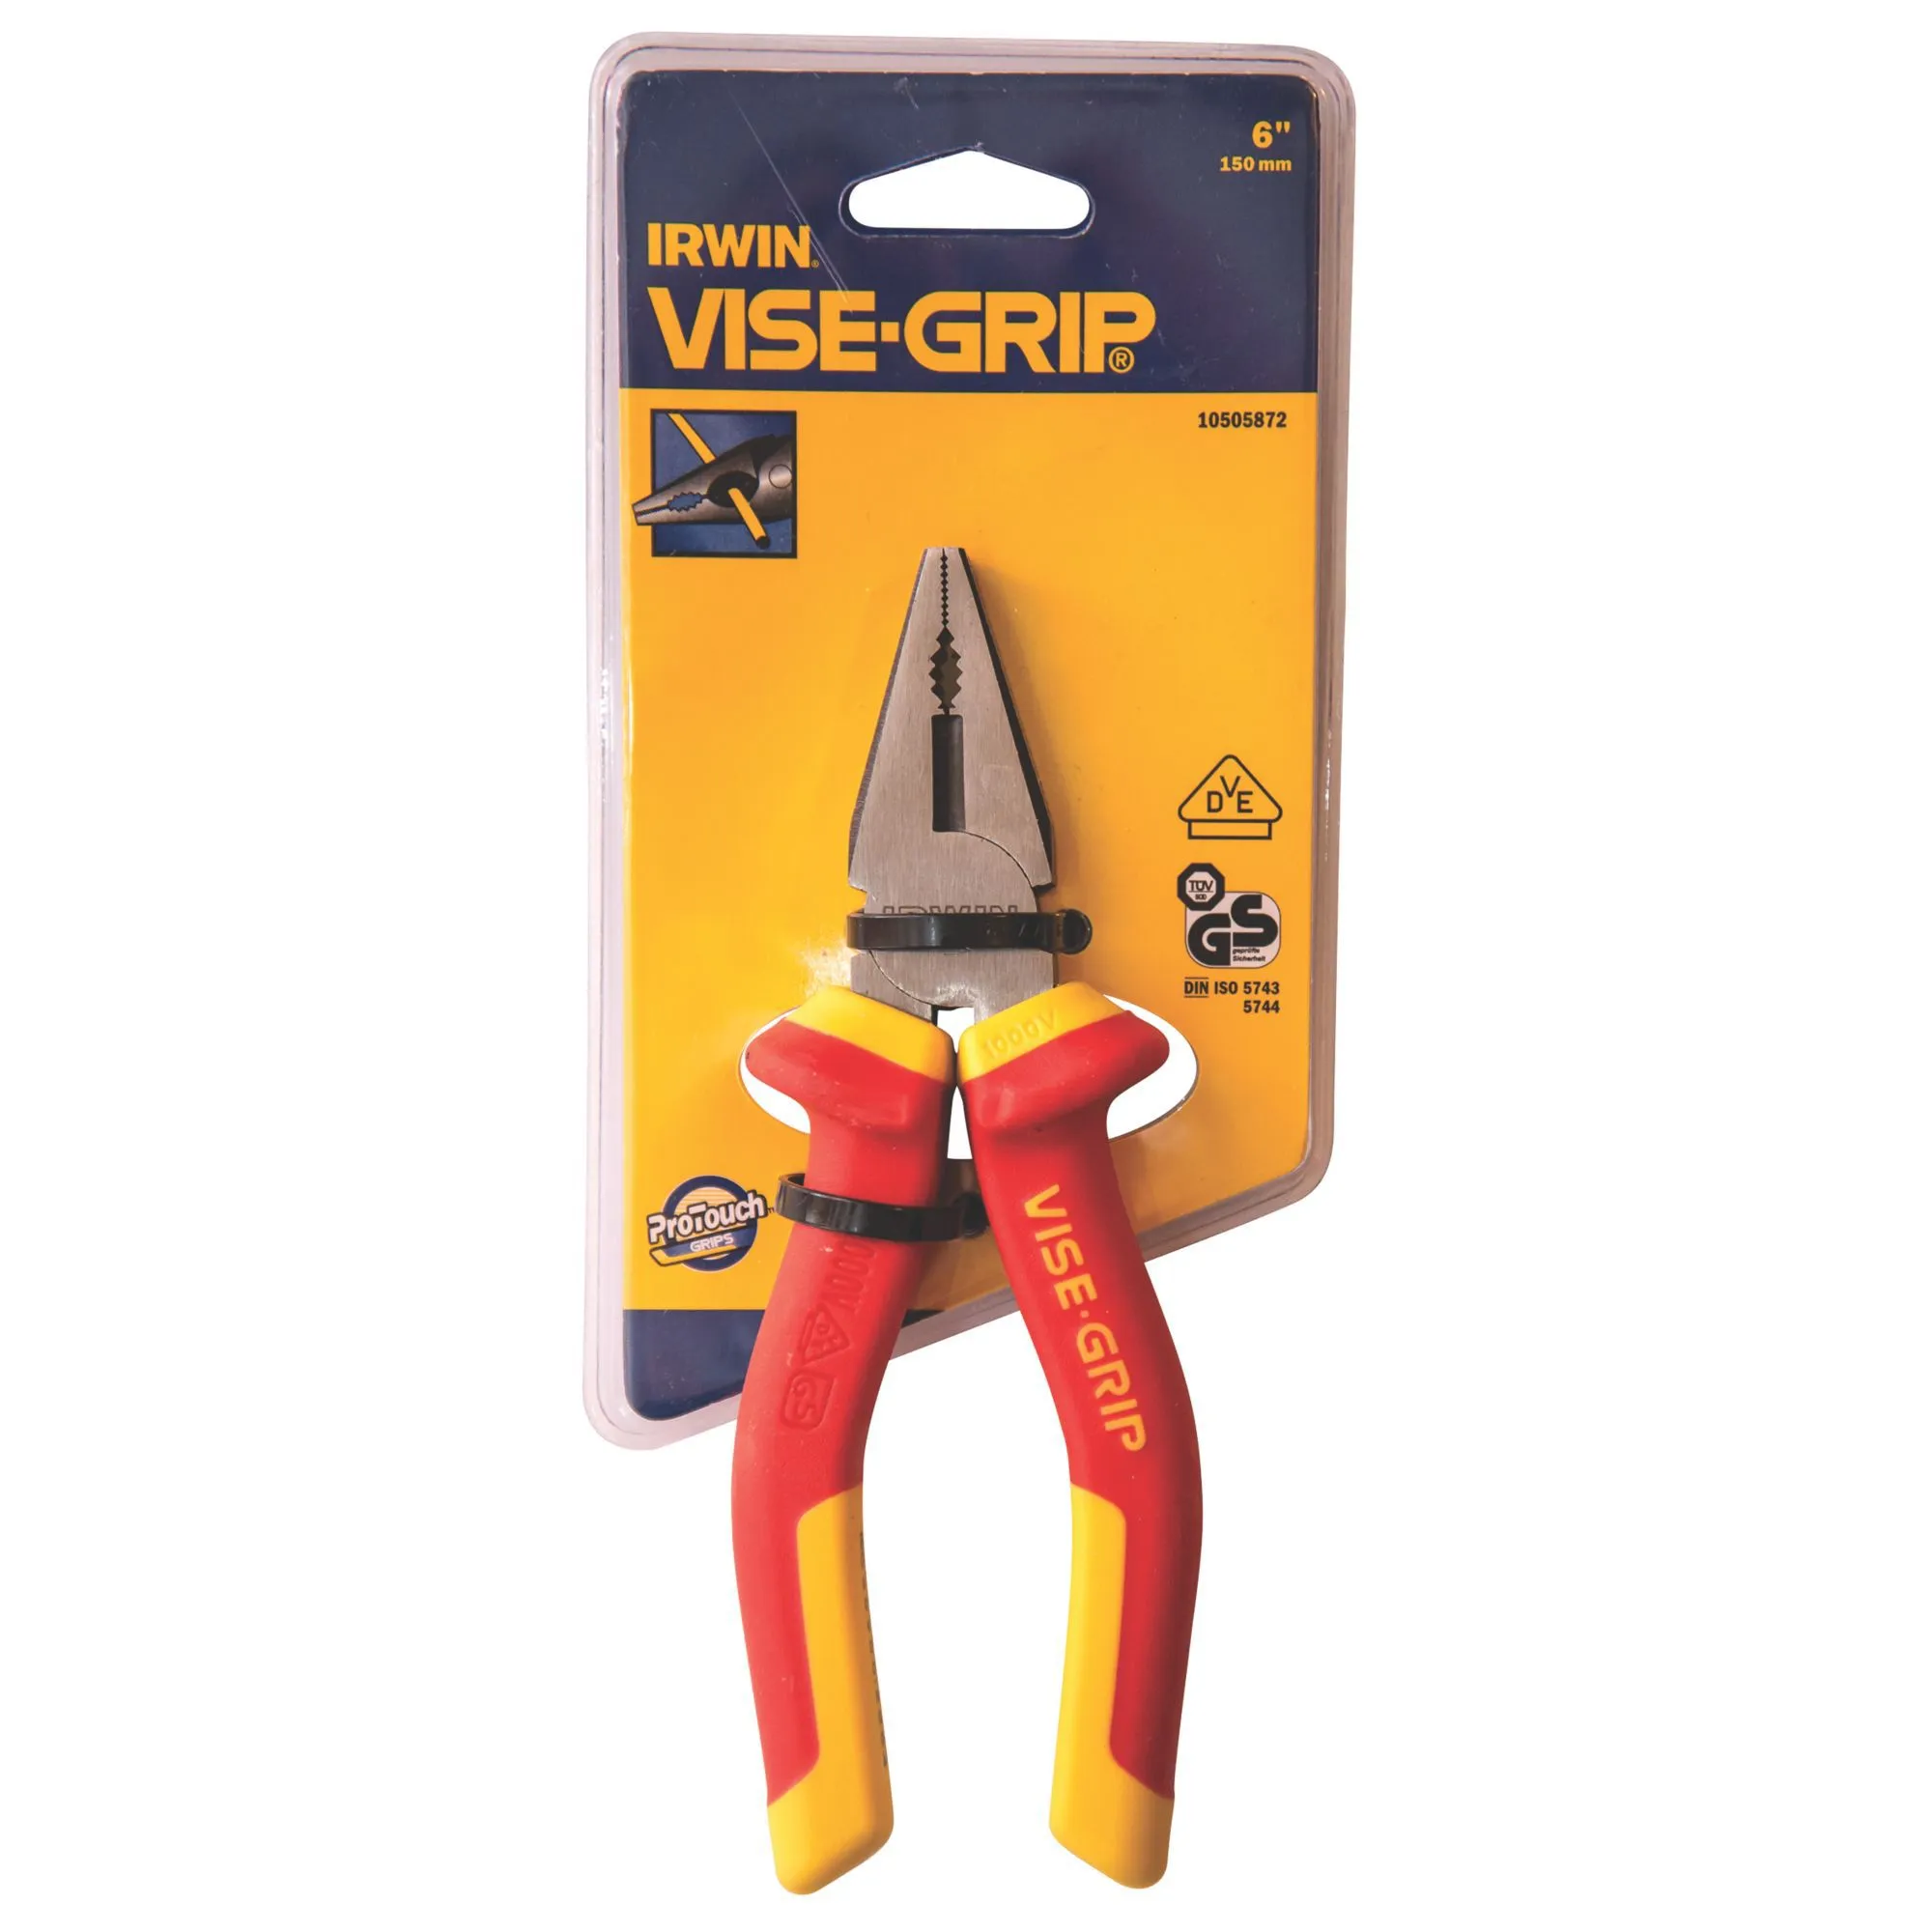 Irwin Vise-Grip 6" Combination pliers